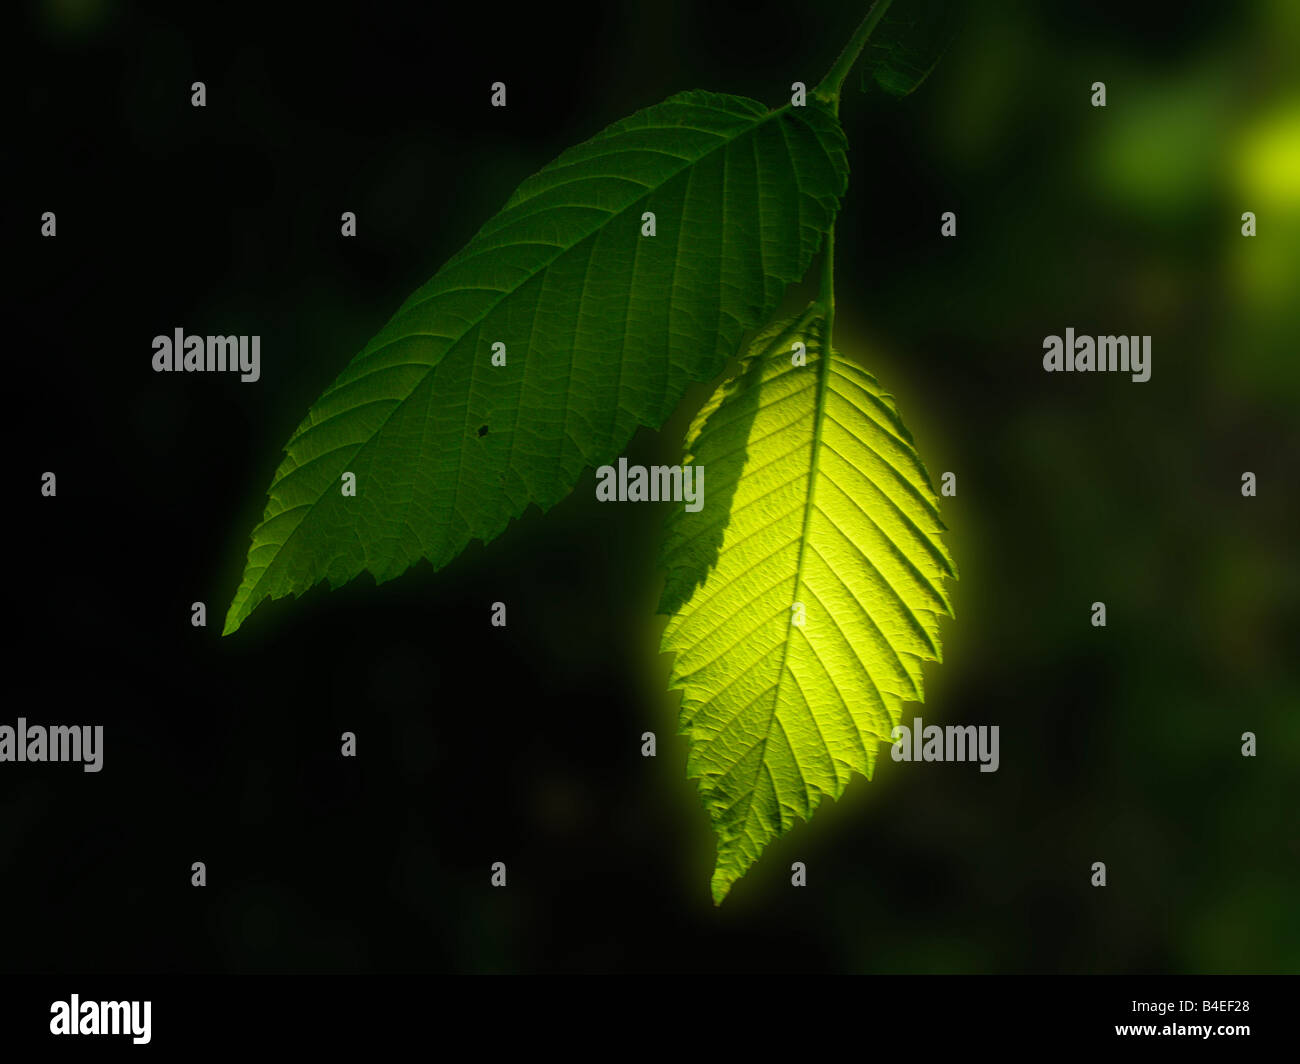 Sunlit leaf against dark background. Stock Photo